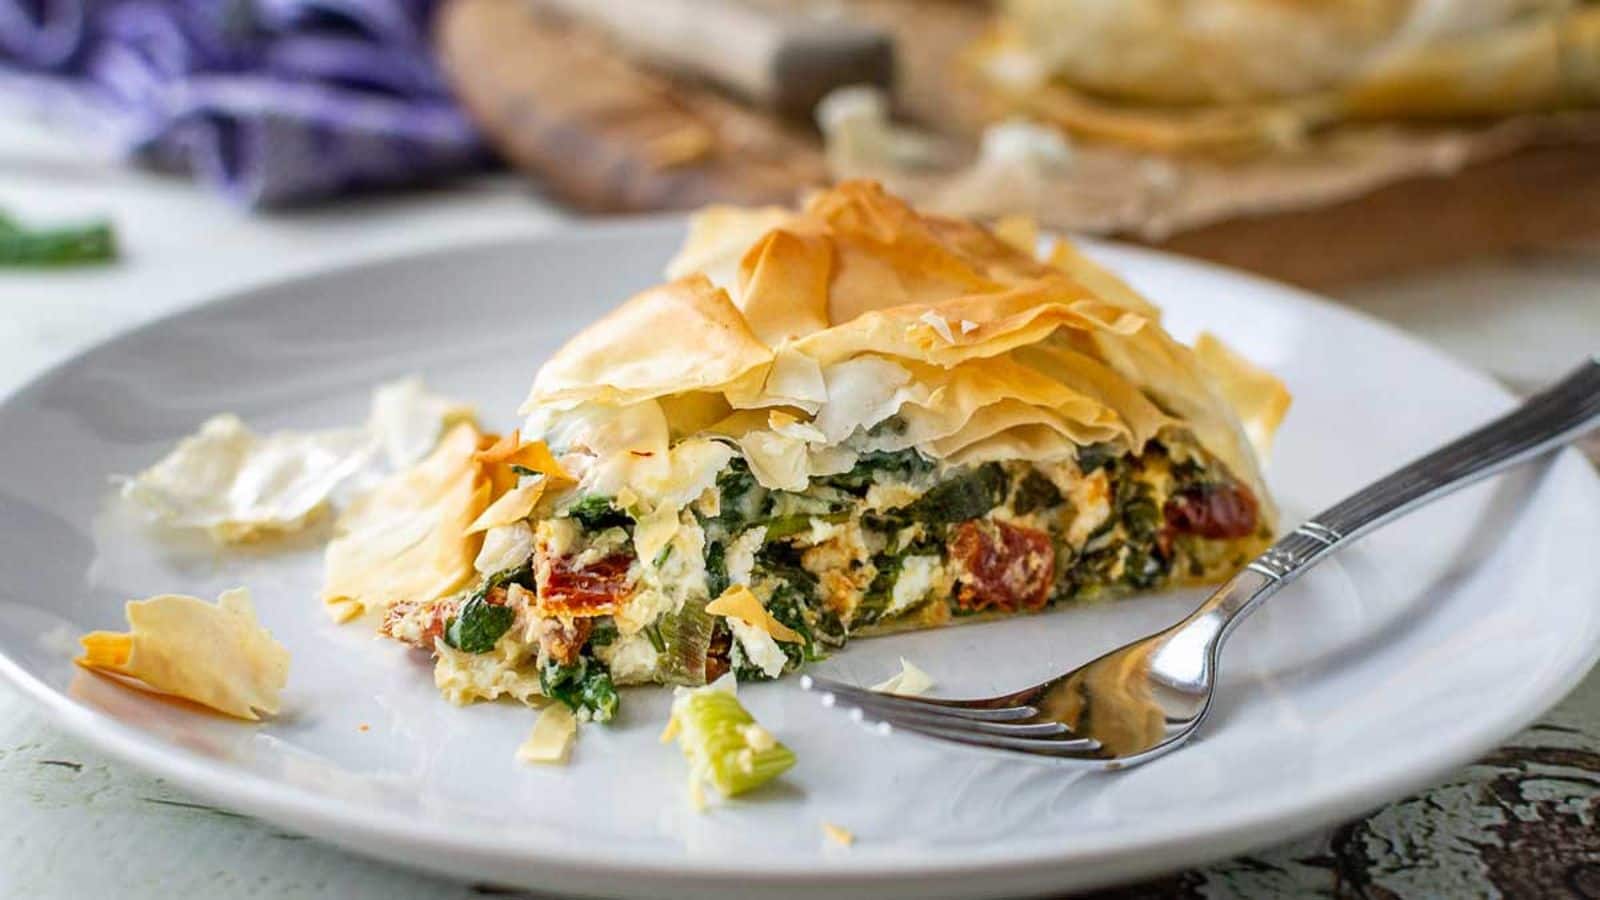 Have you savored this Greek spanakopita pie